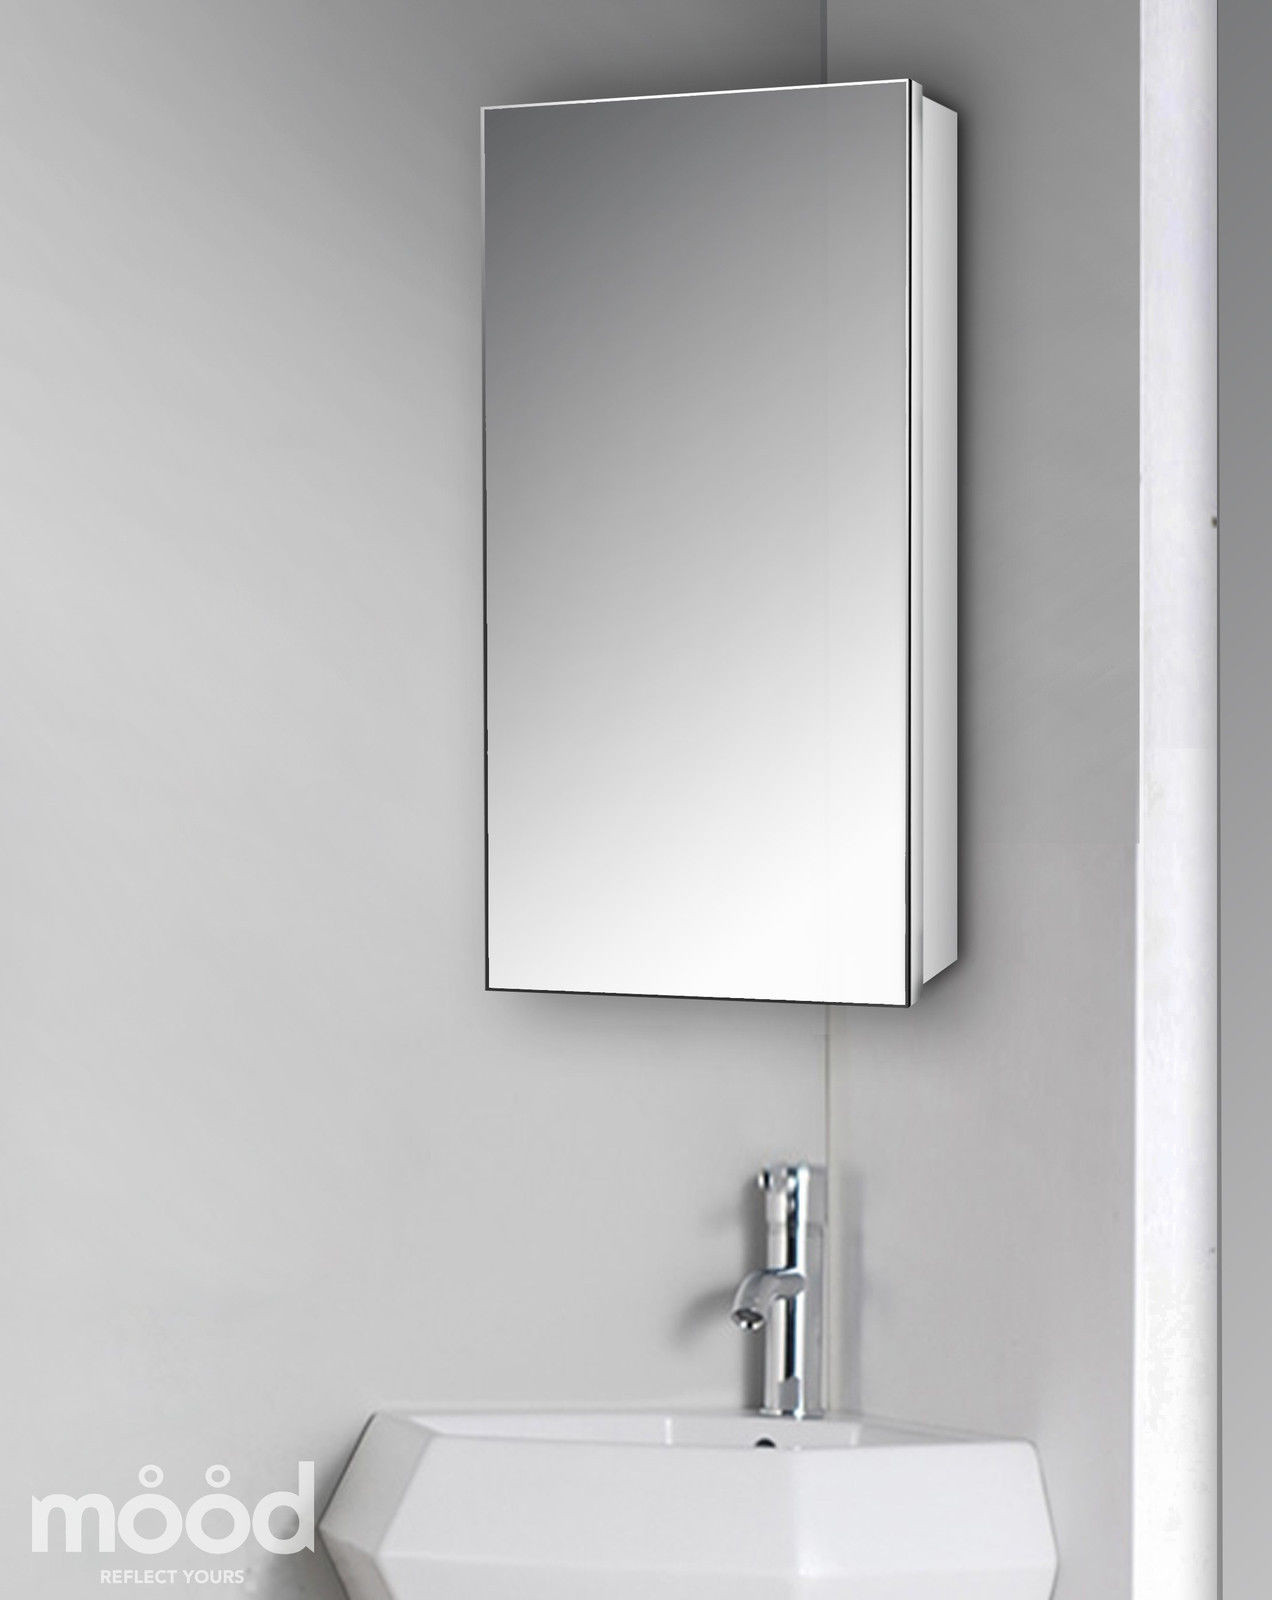 Corner Mirror Bathroom Cabinet
 Elegant Slim Corner Bathroom MIRROR CABINET 65x30 with